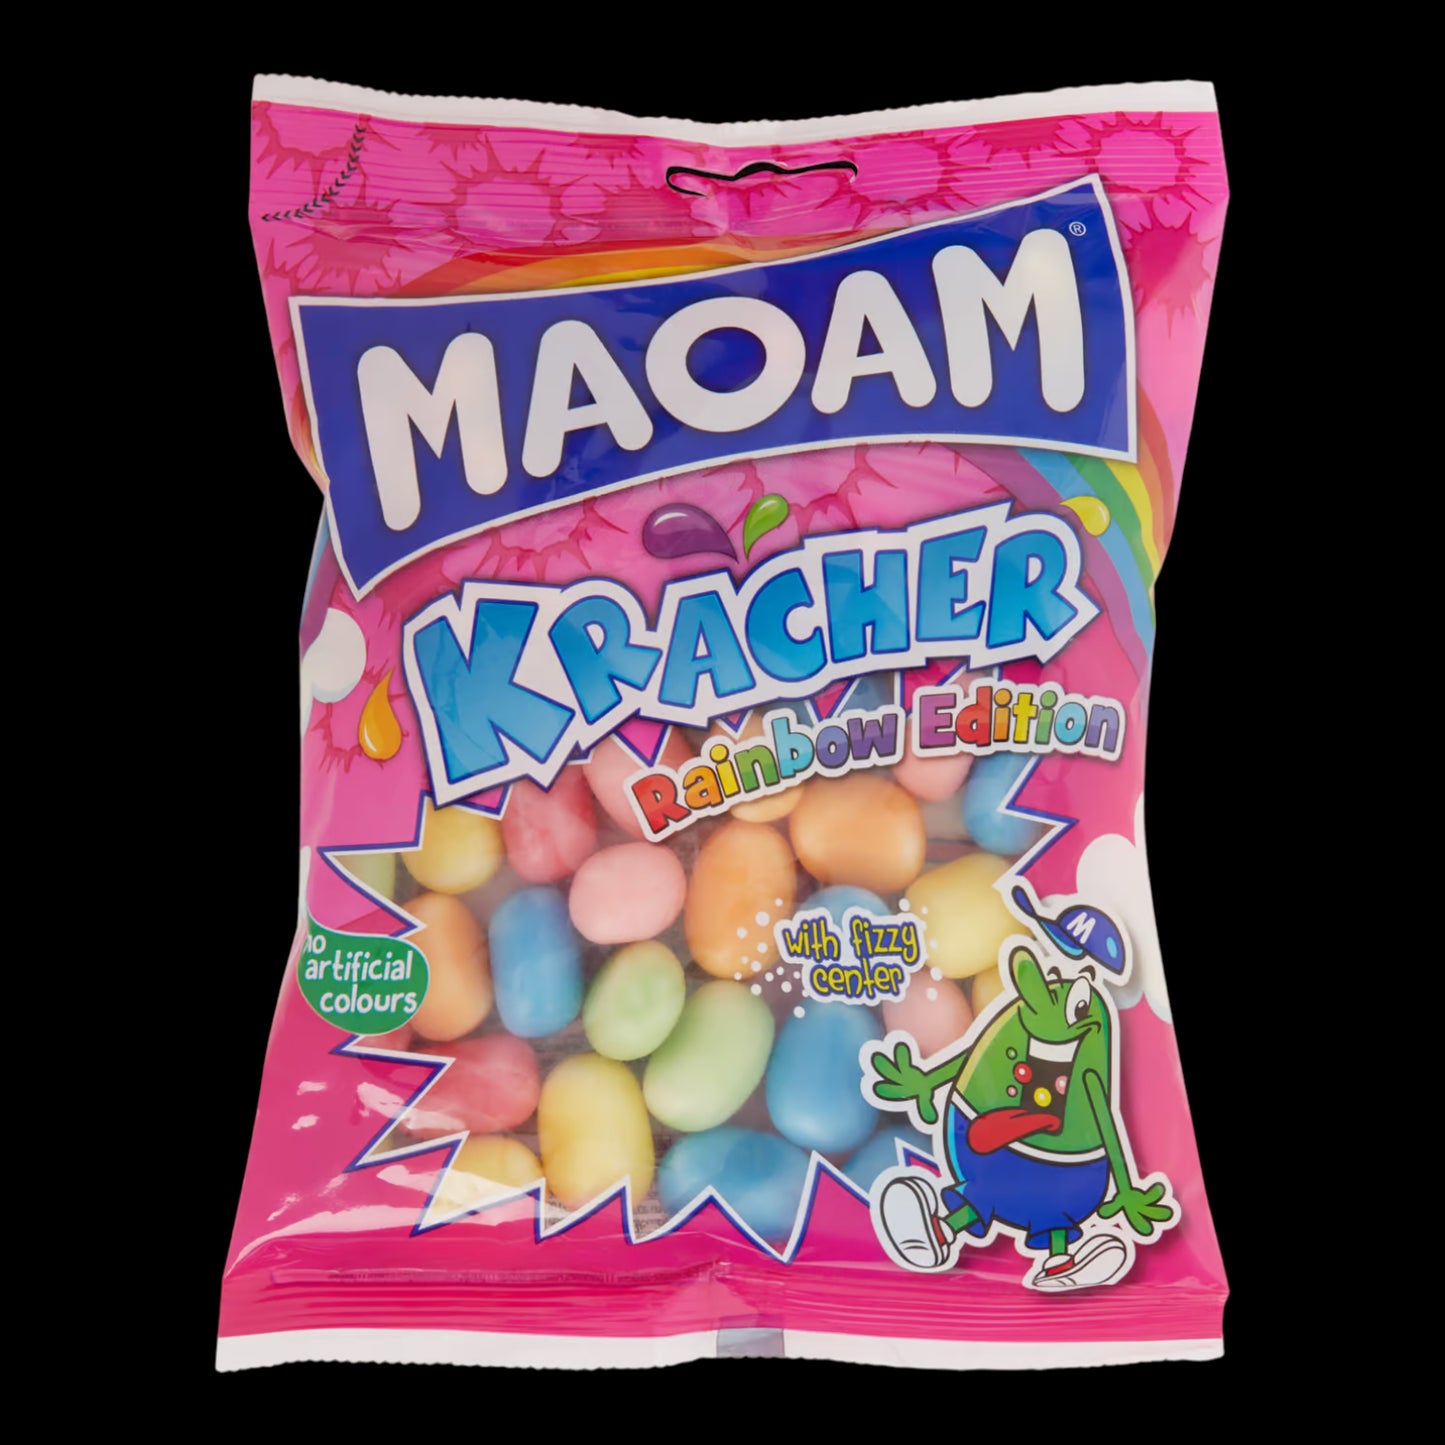 MAOAM Kracher Rainbow Edition 275 g